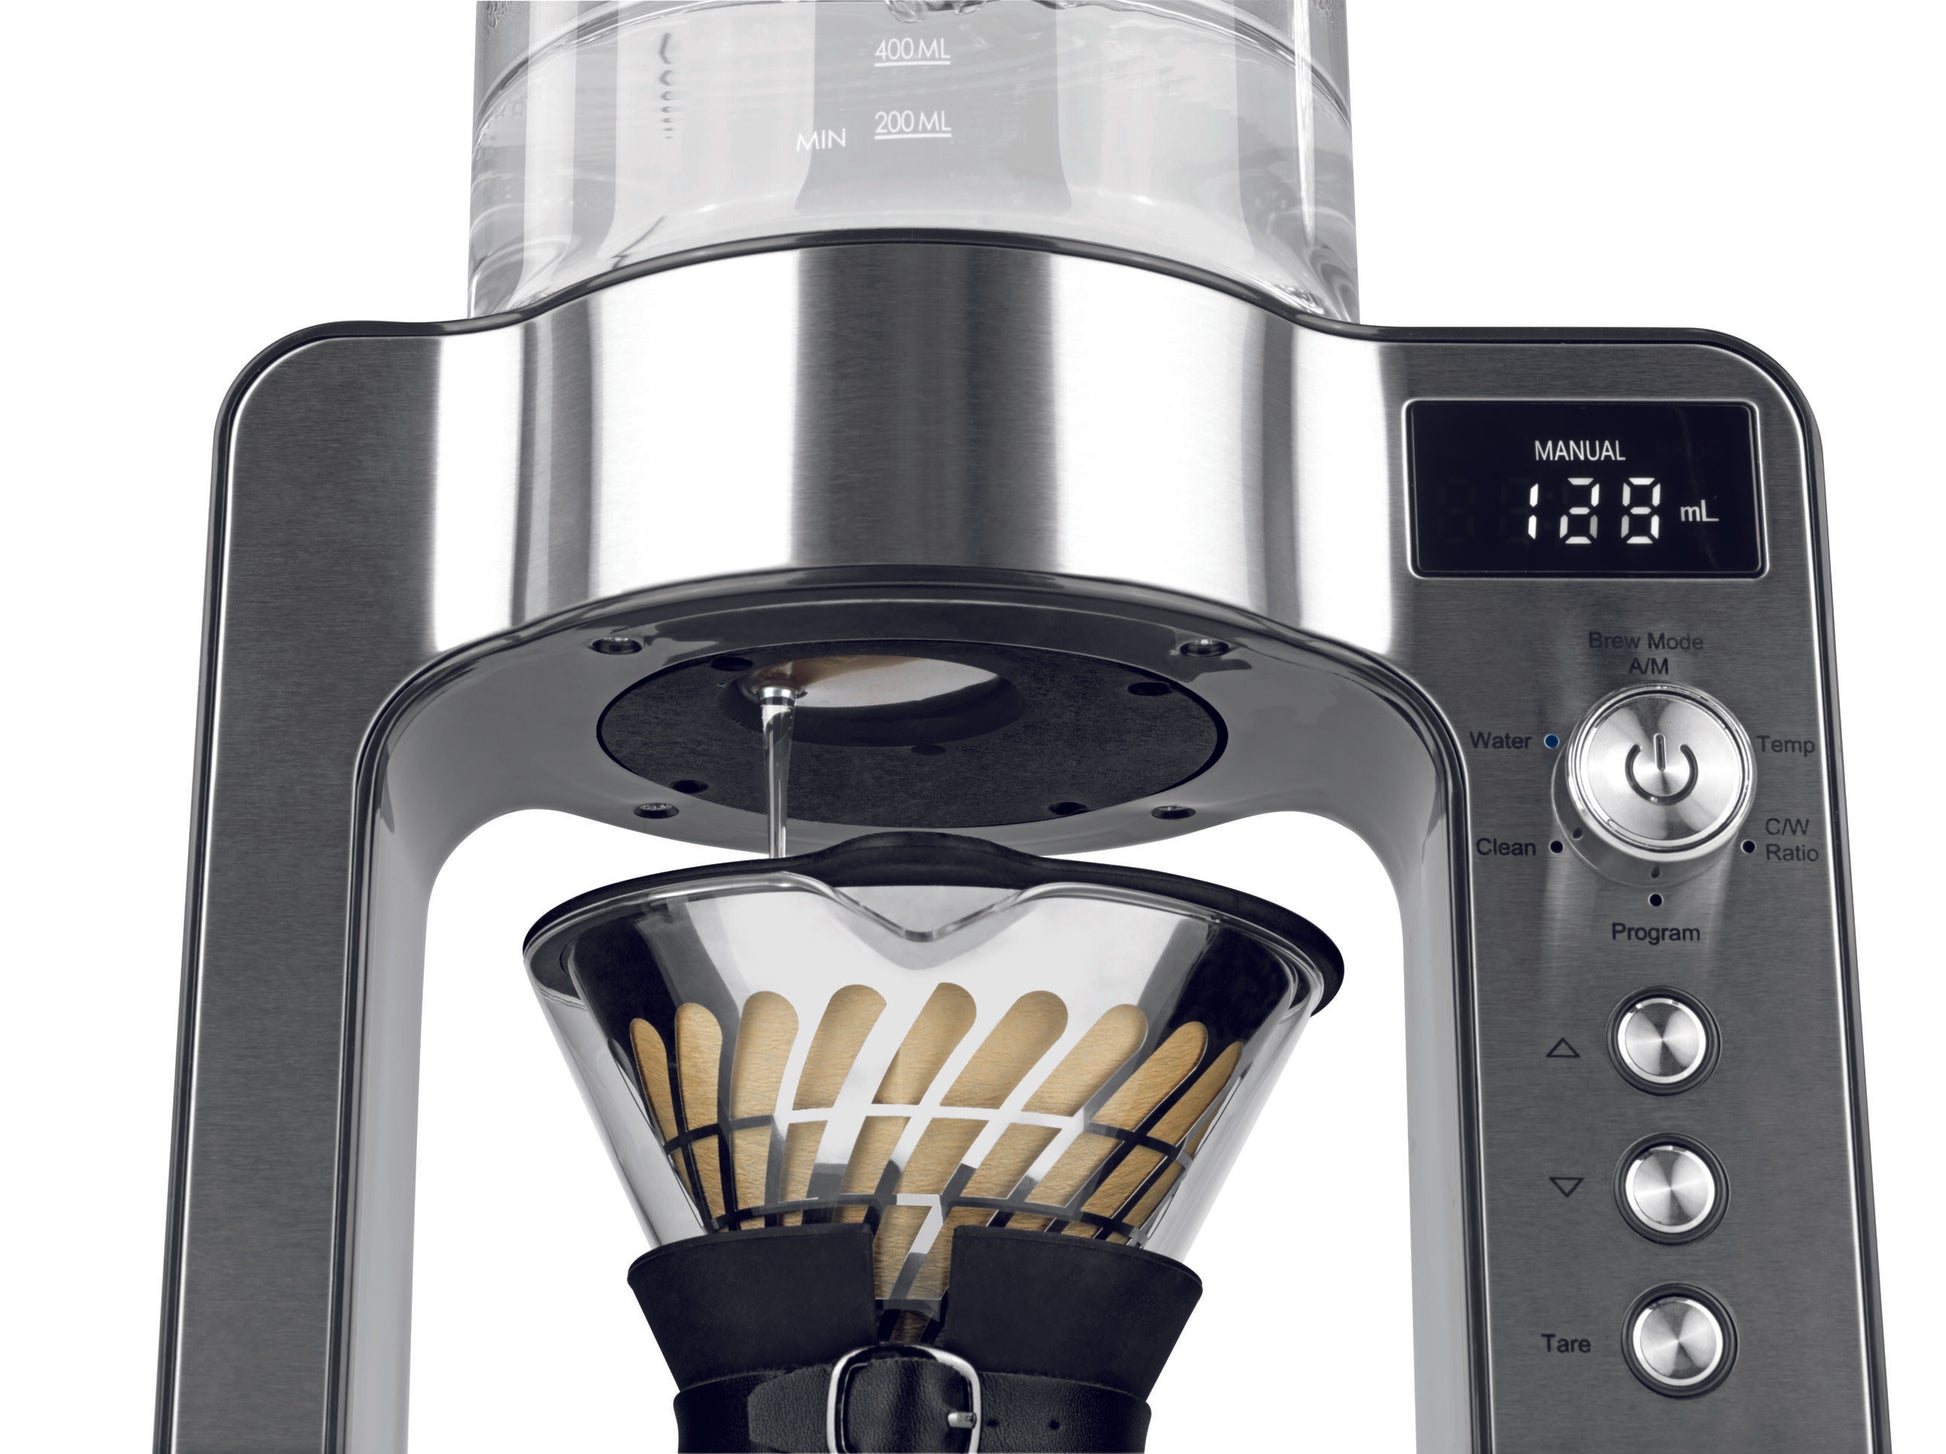  Gourmia GCM3350 Fully Automatic Pour Over Coffee